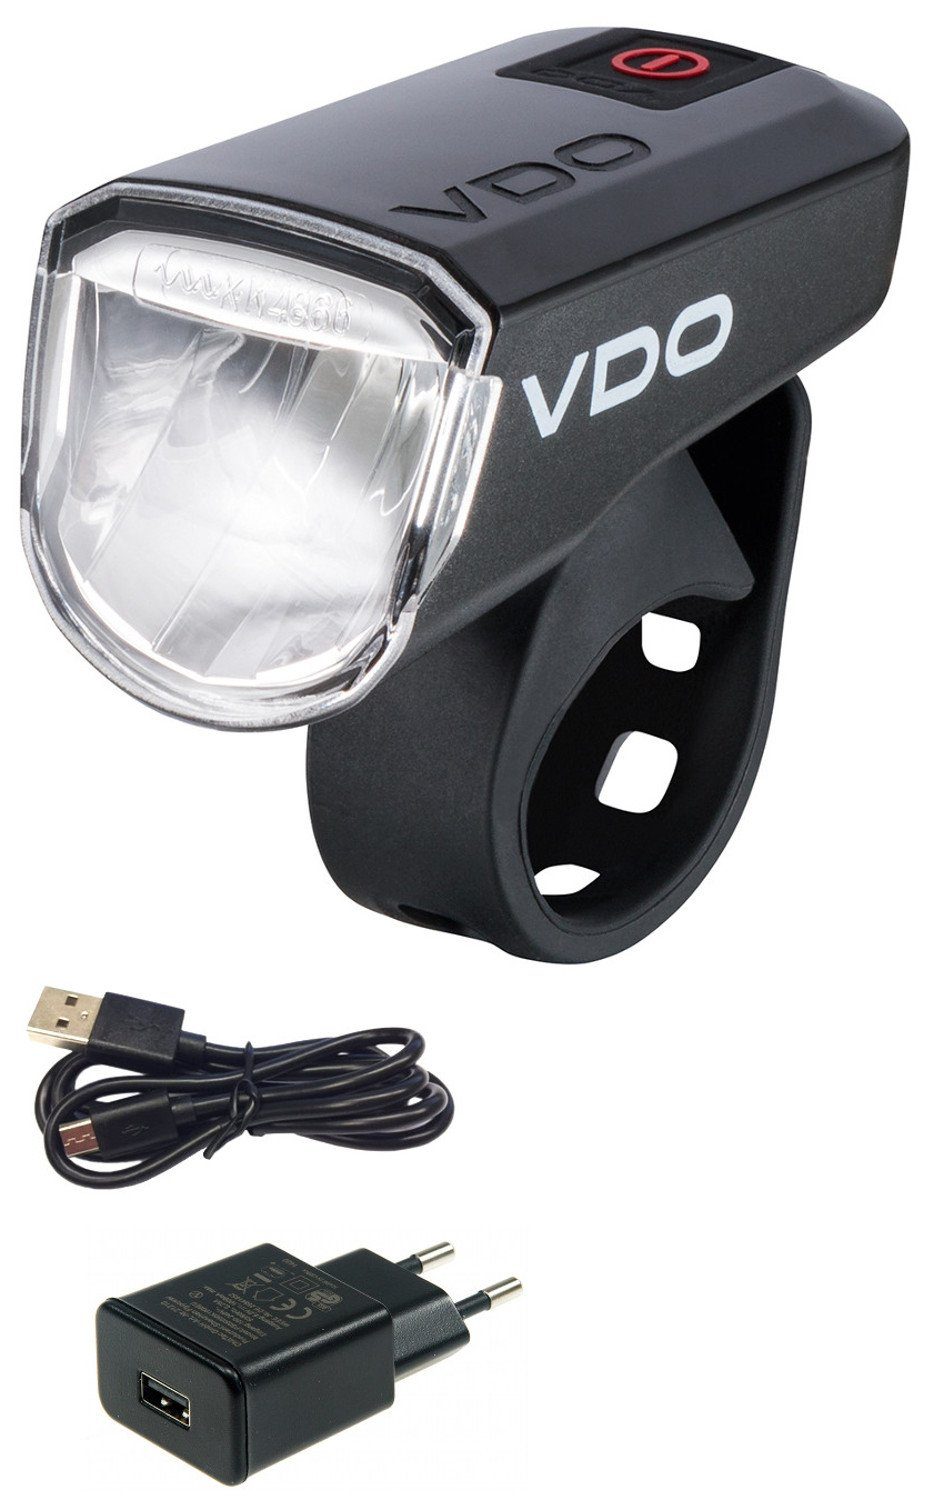 SIGMA SPORT Fahrradbeleuchtung VDO Fahrrad Frontlampe ECO LIGHT M30 Plus inkl. Netzteil